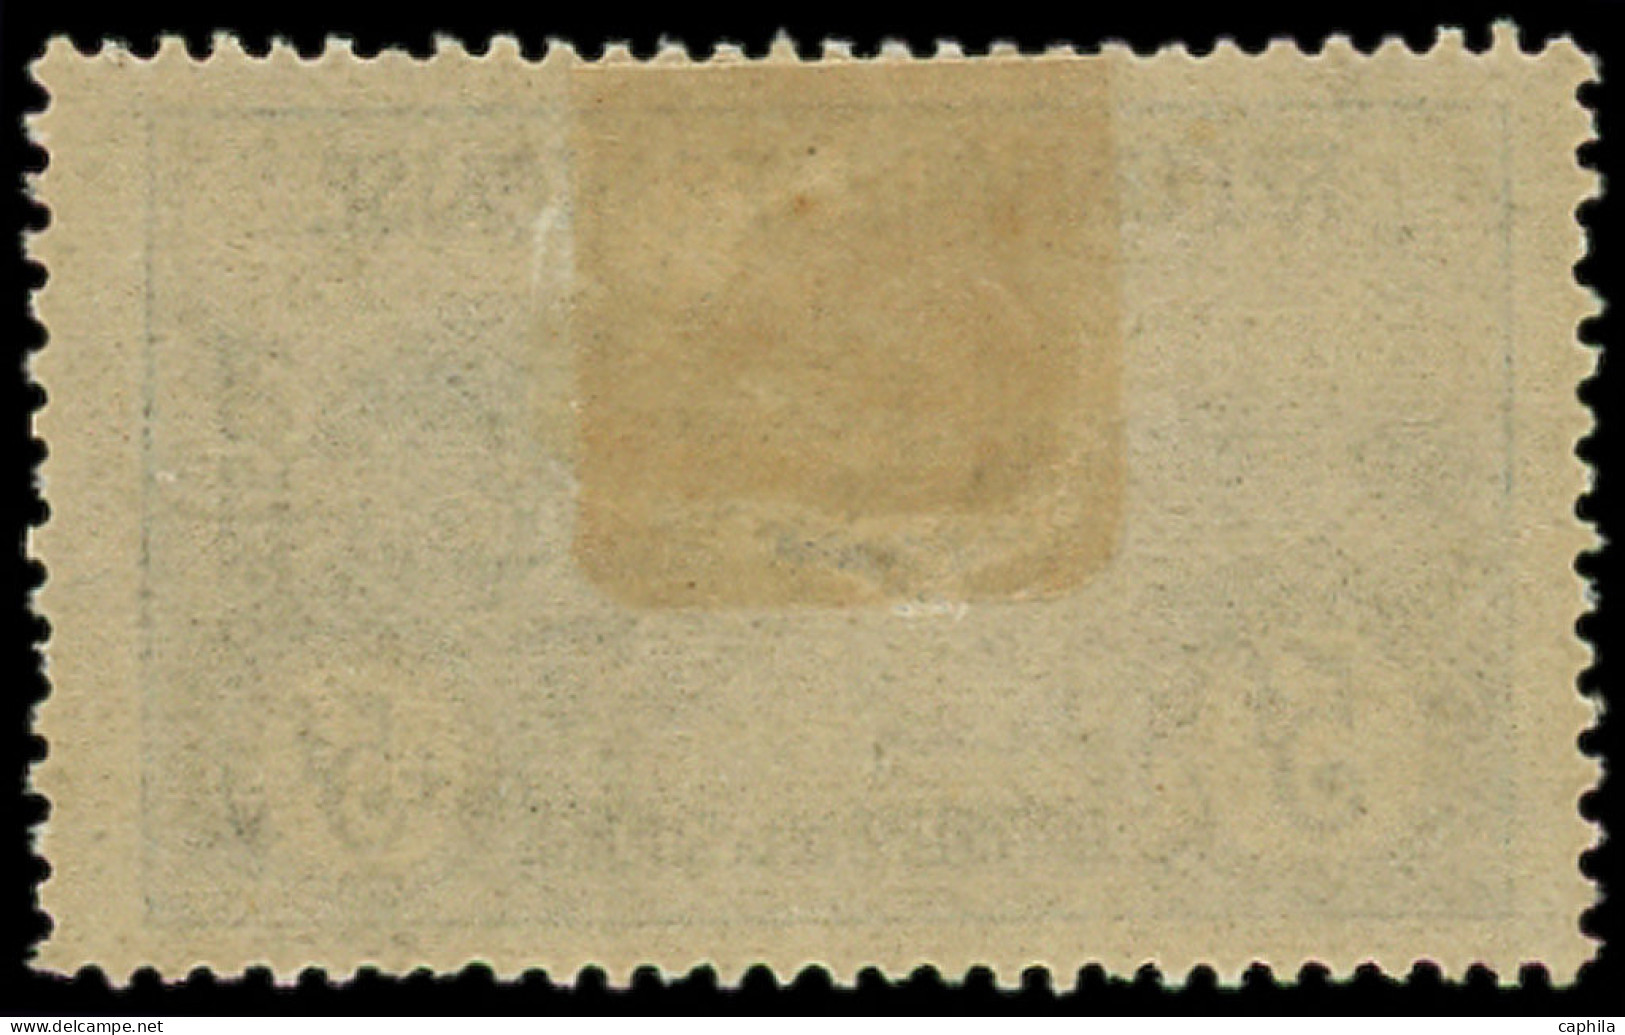 * FRANCE - Poste - 155, Centrage Correct: 5f. + 5f. Orphelins - Unused Stamps